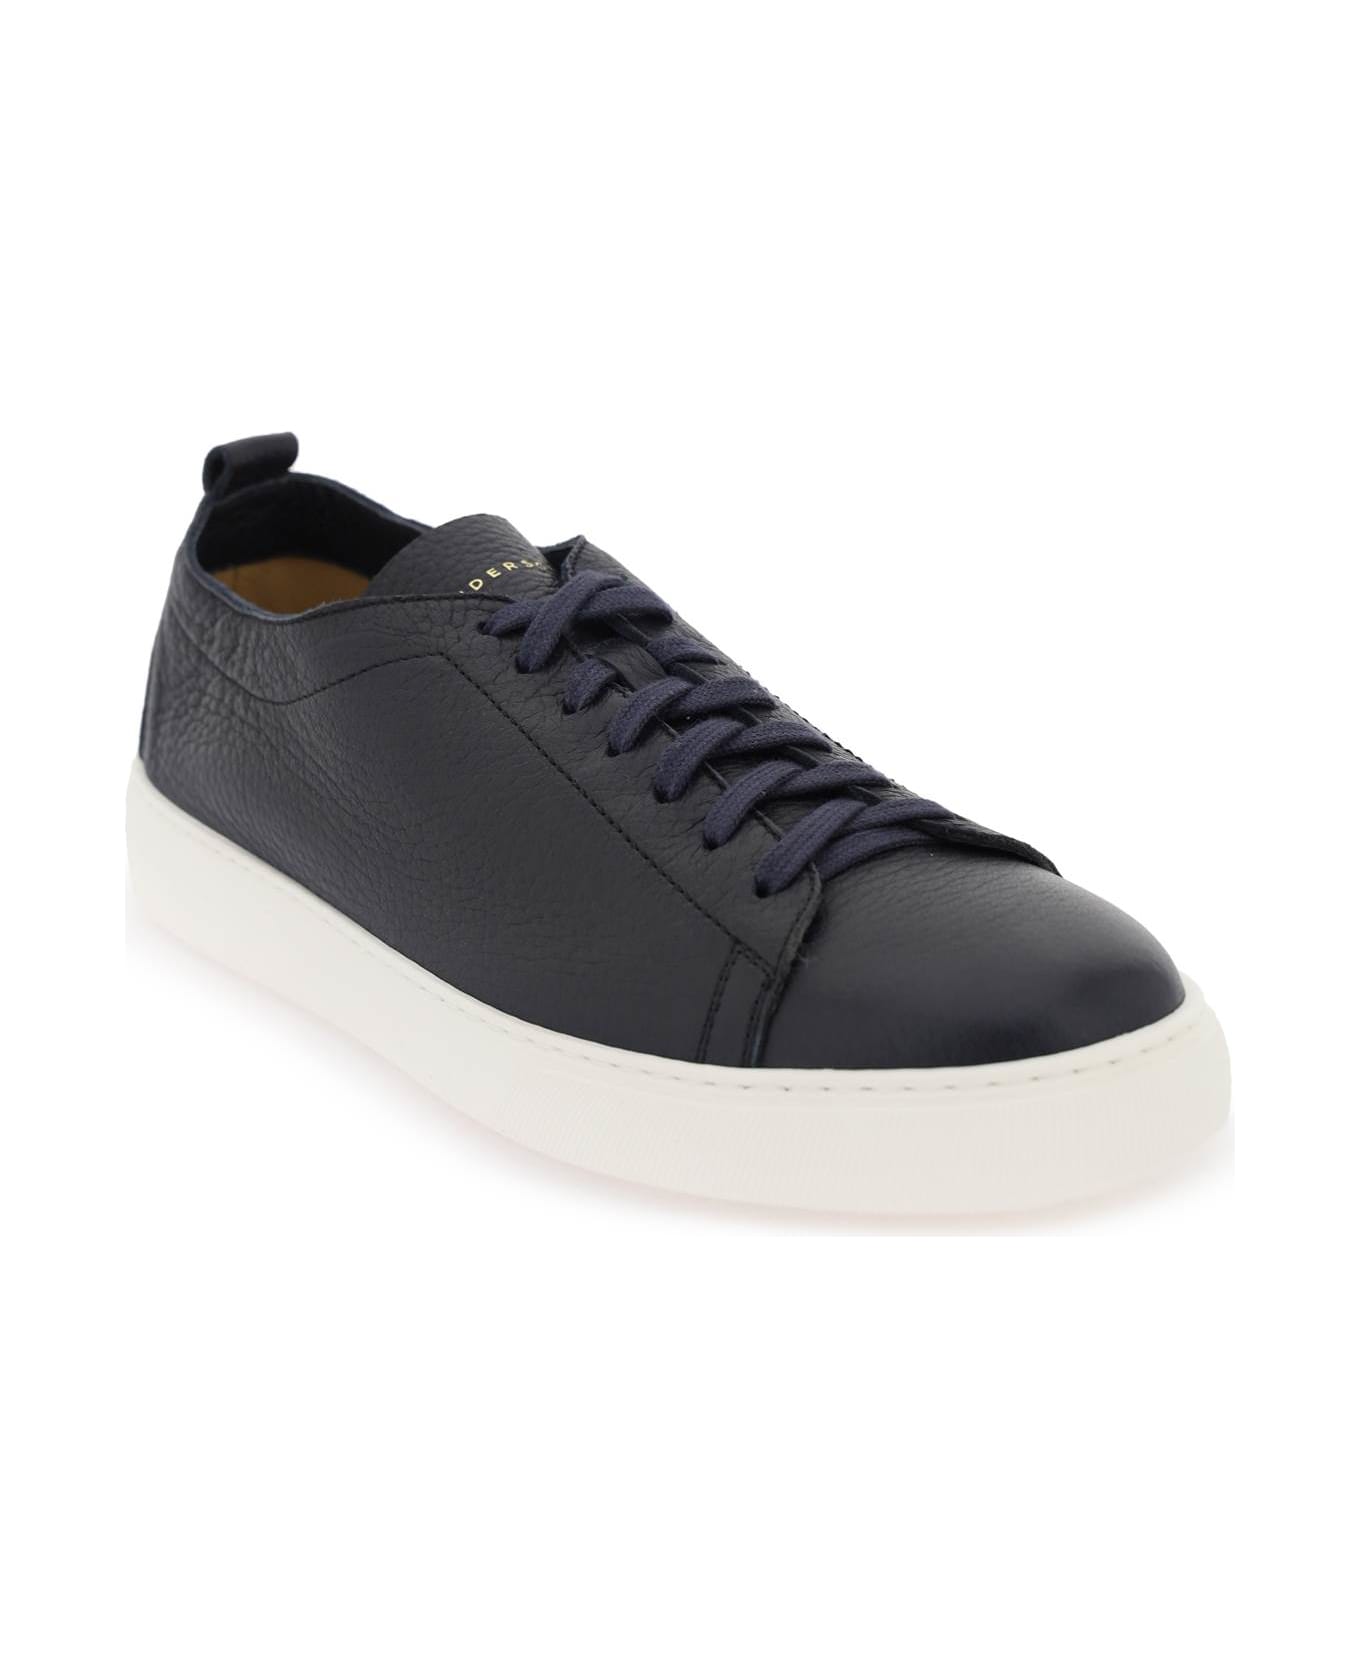 Henderson Baracco Leather Sneakers - BLUE RIVIERA (Blue)